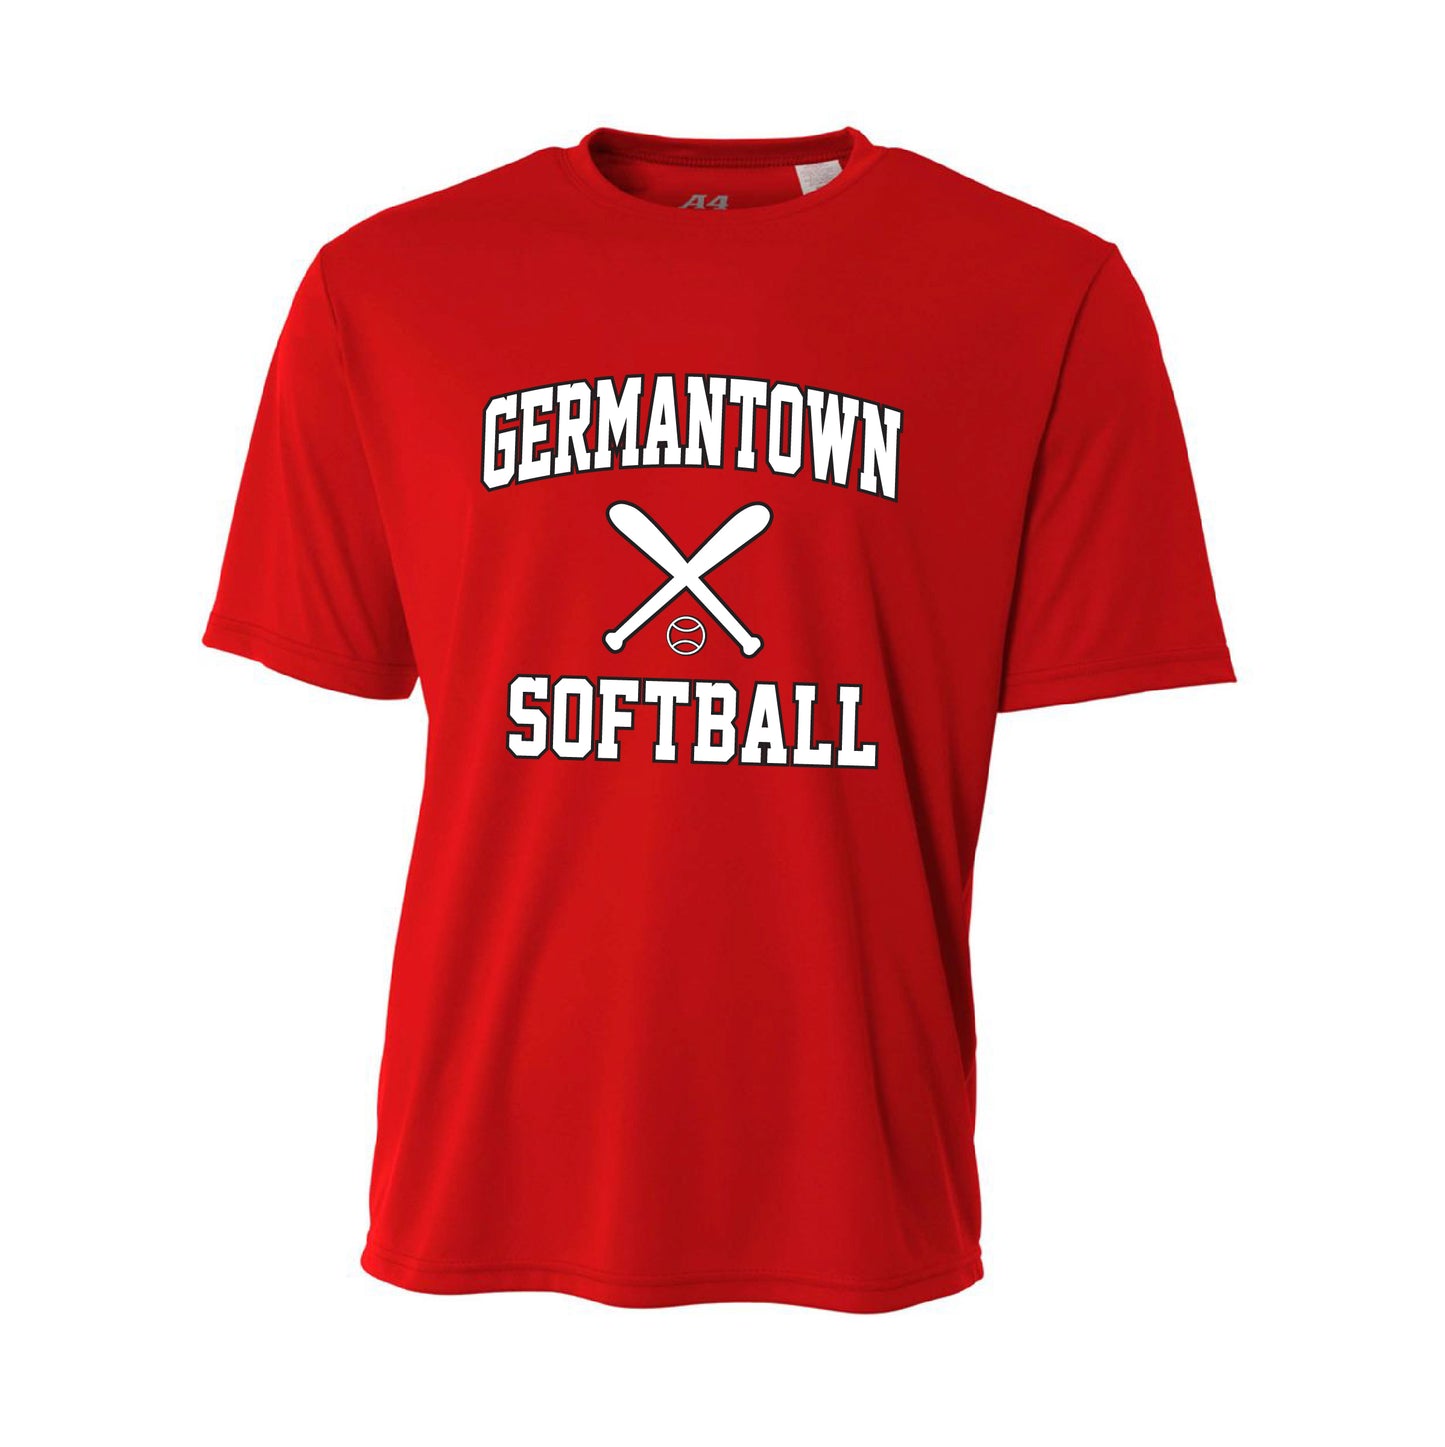 Germantown Softball - Red Jersey - 12879 14U